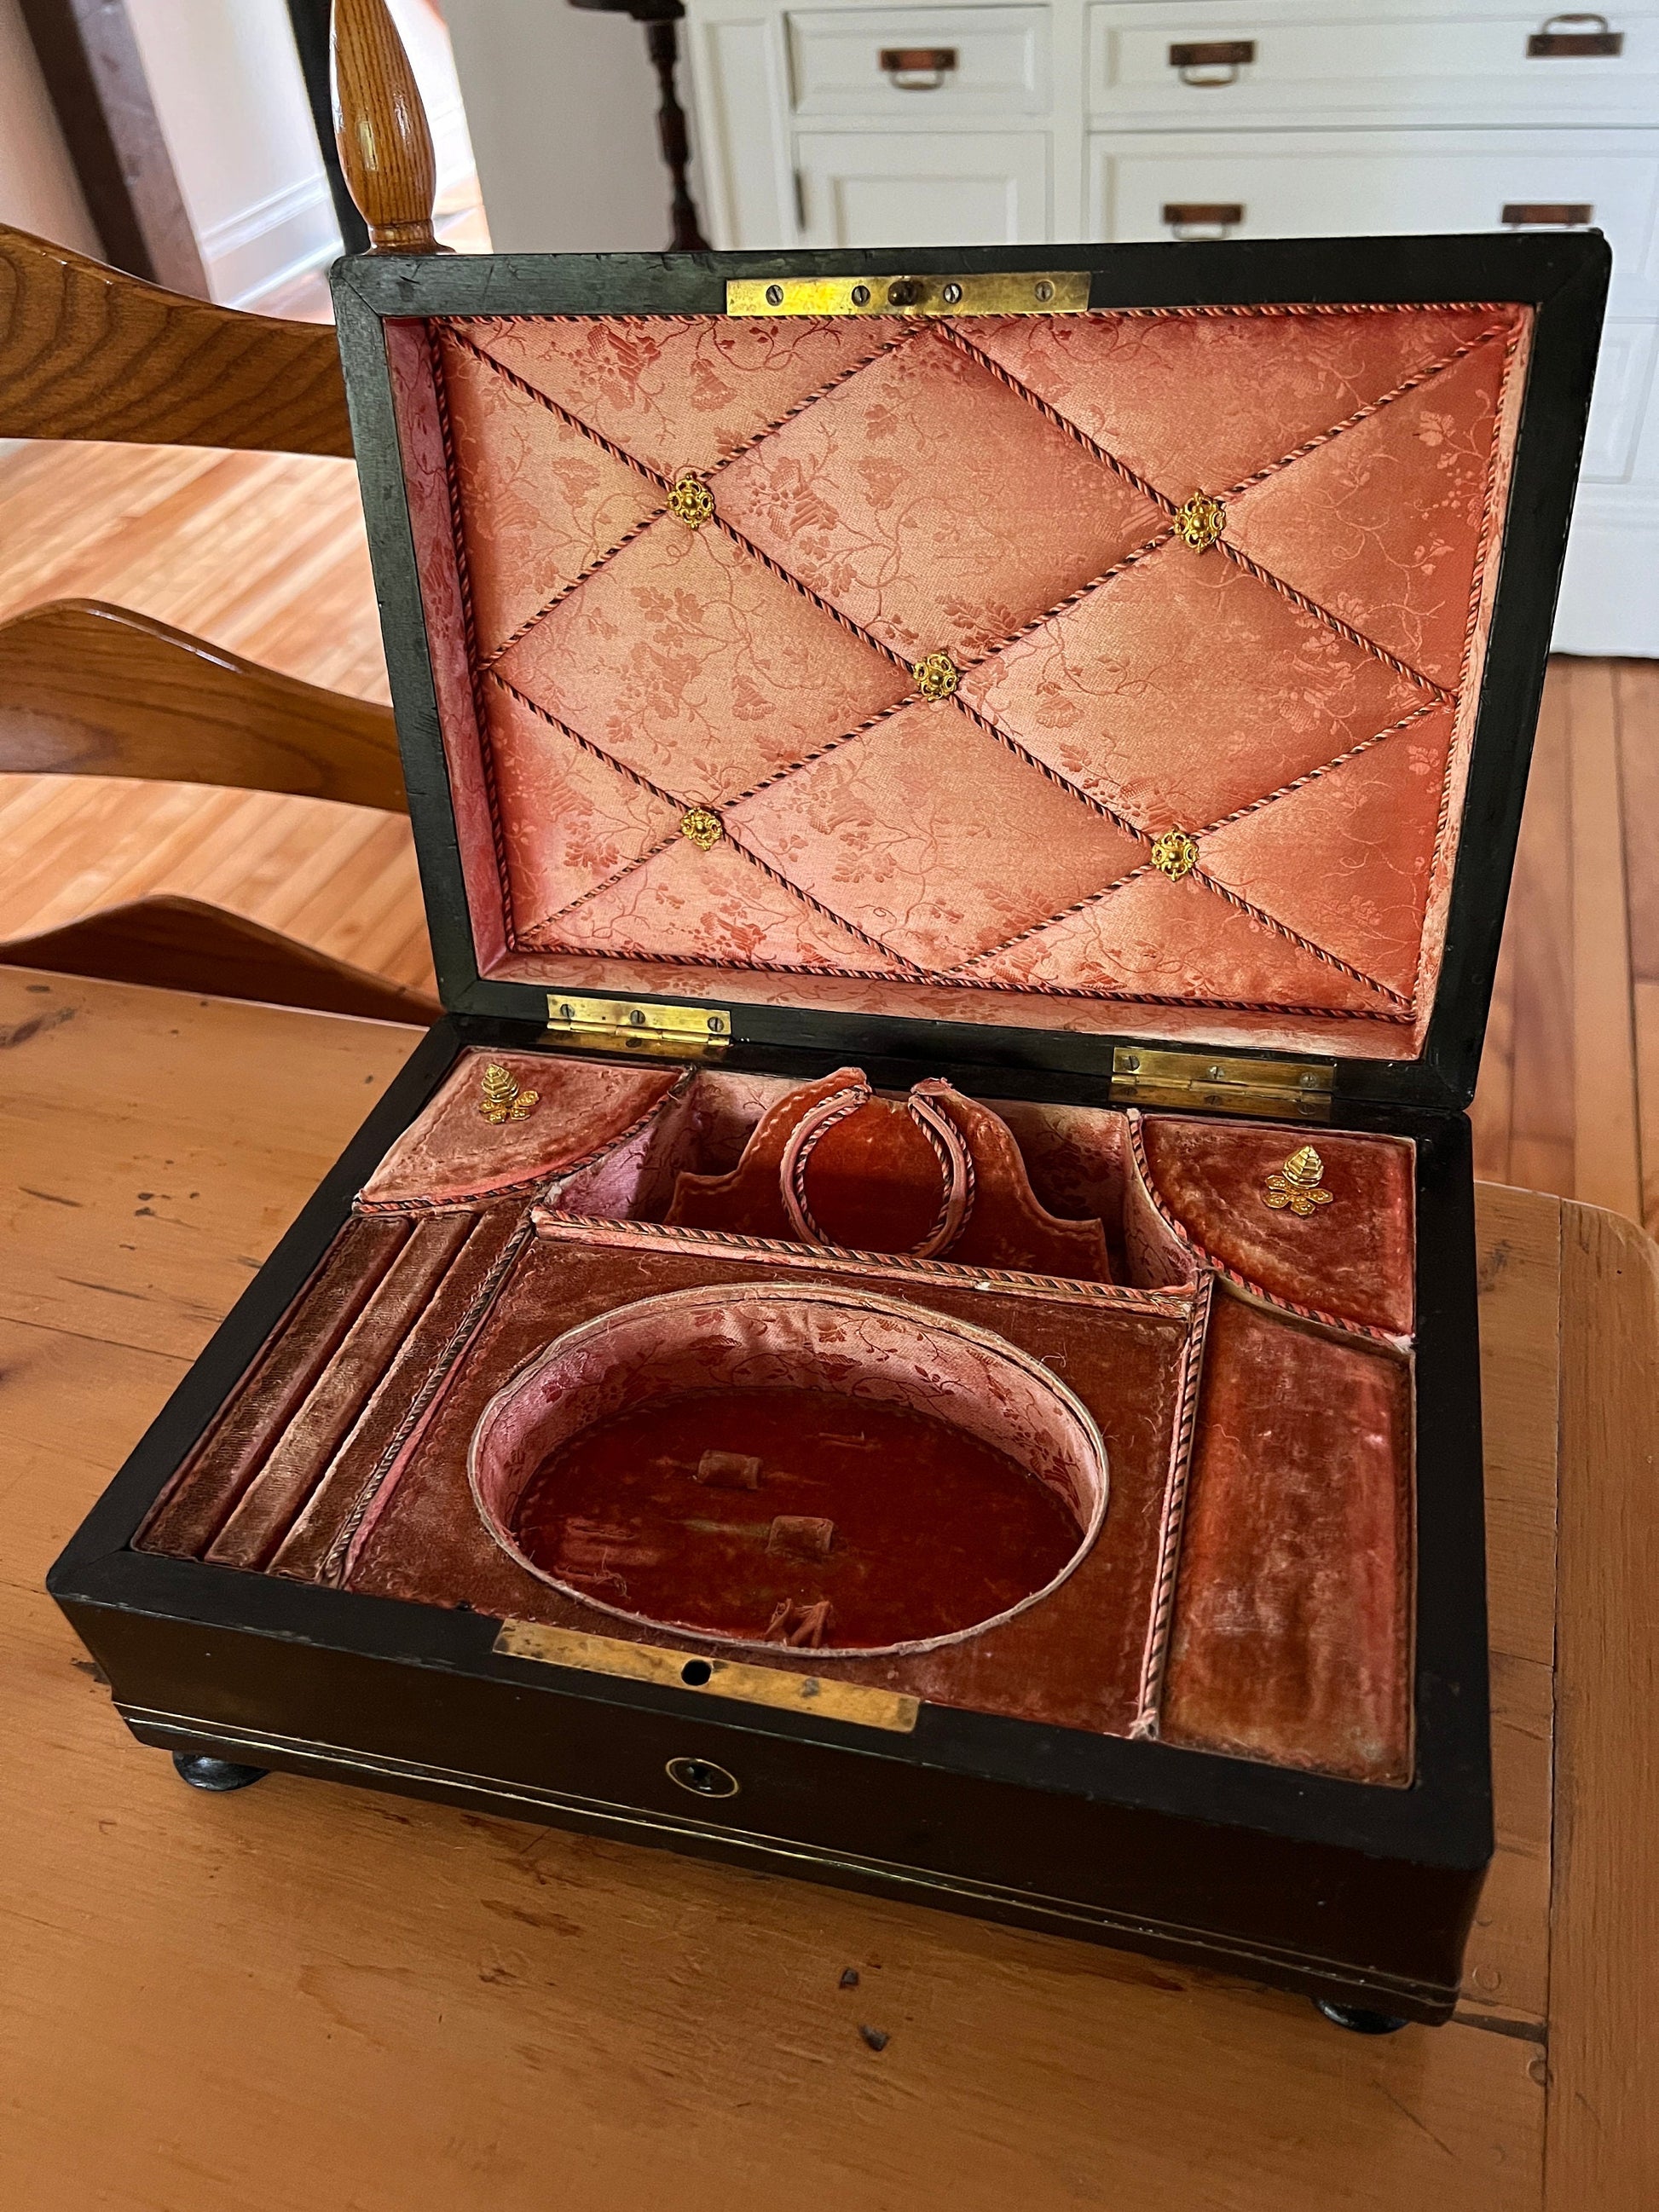 European vintage Wood box with lock storage box rectangle Desktop box  antique wooden jewelry box